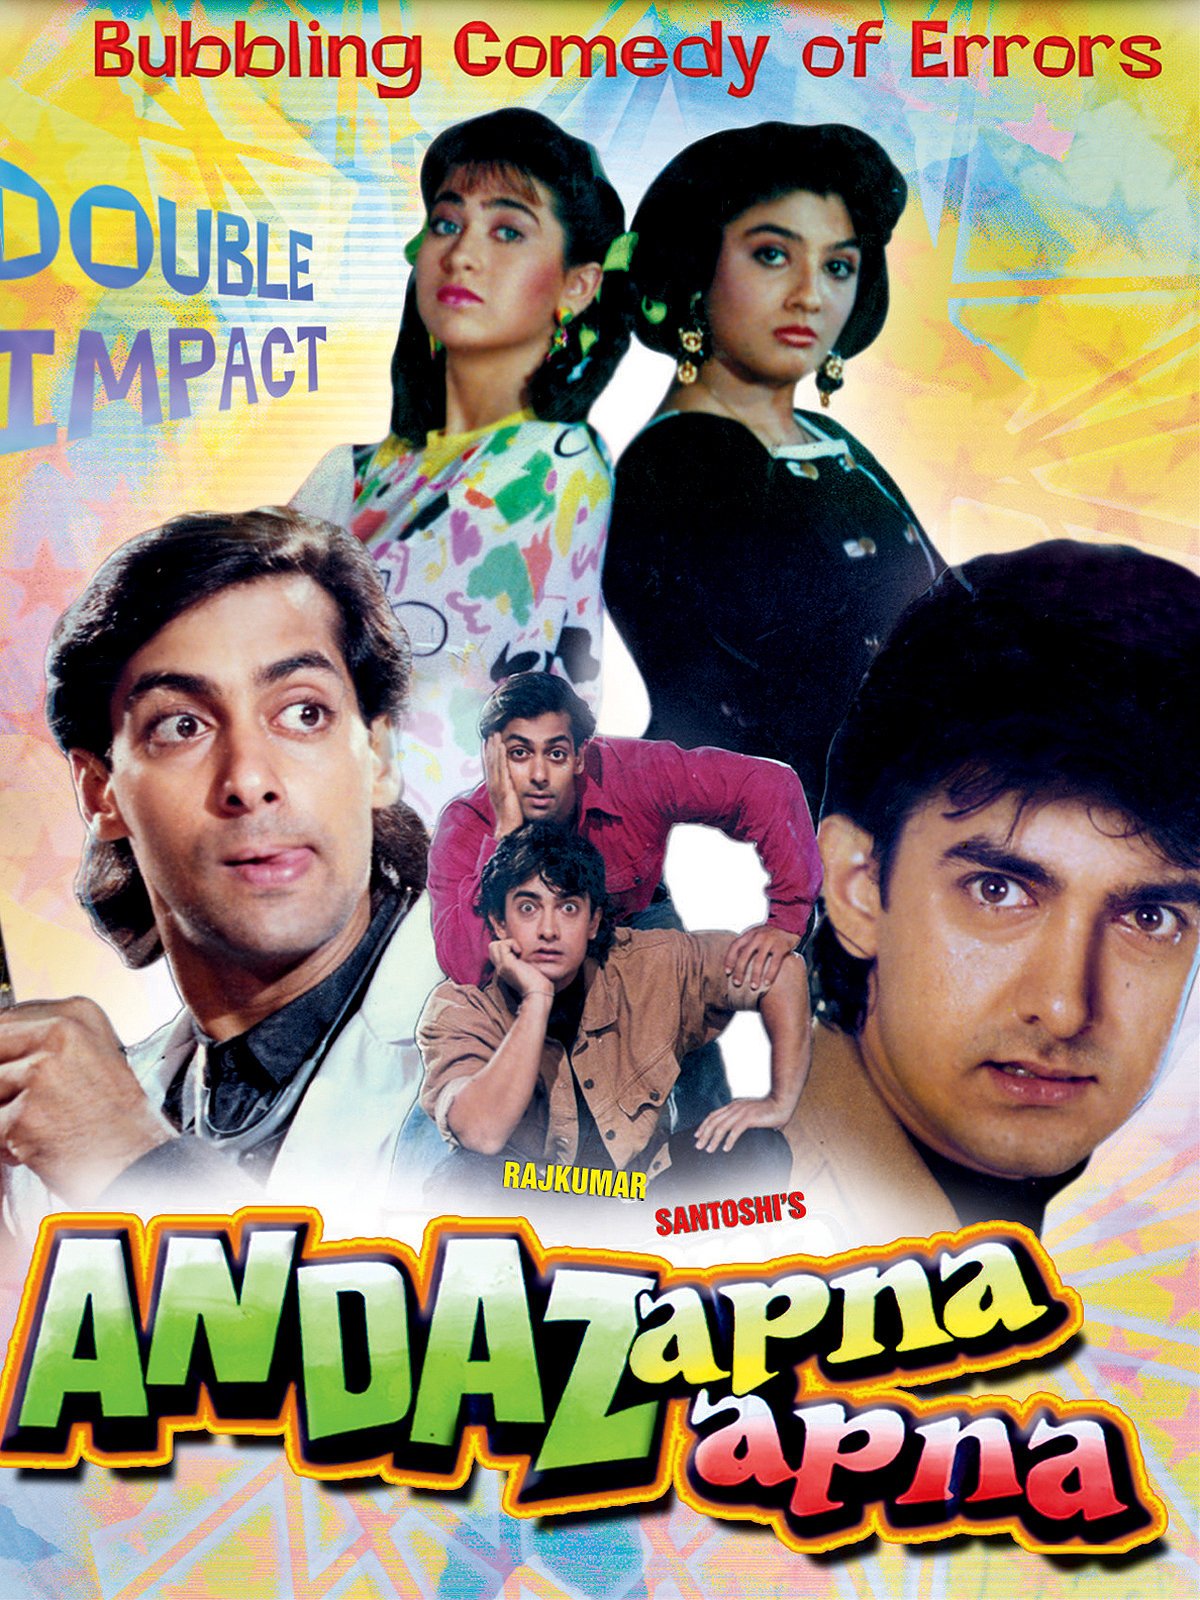 andaz apna apna one of the comedy movies bollywood